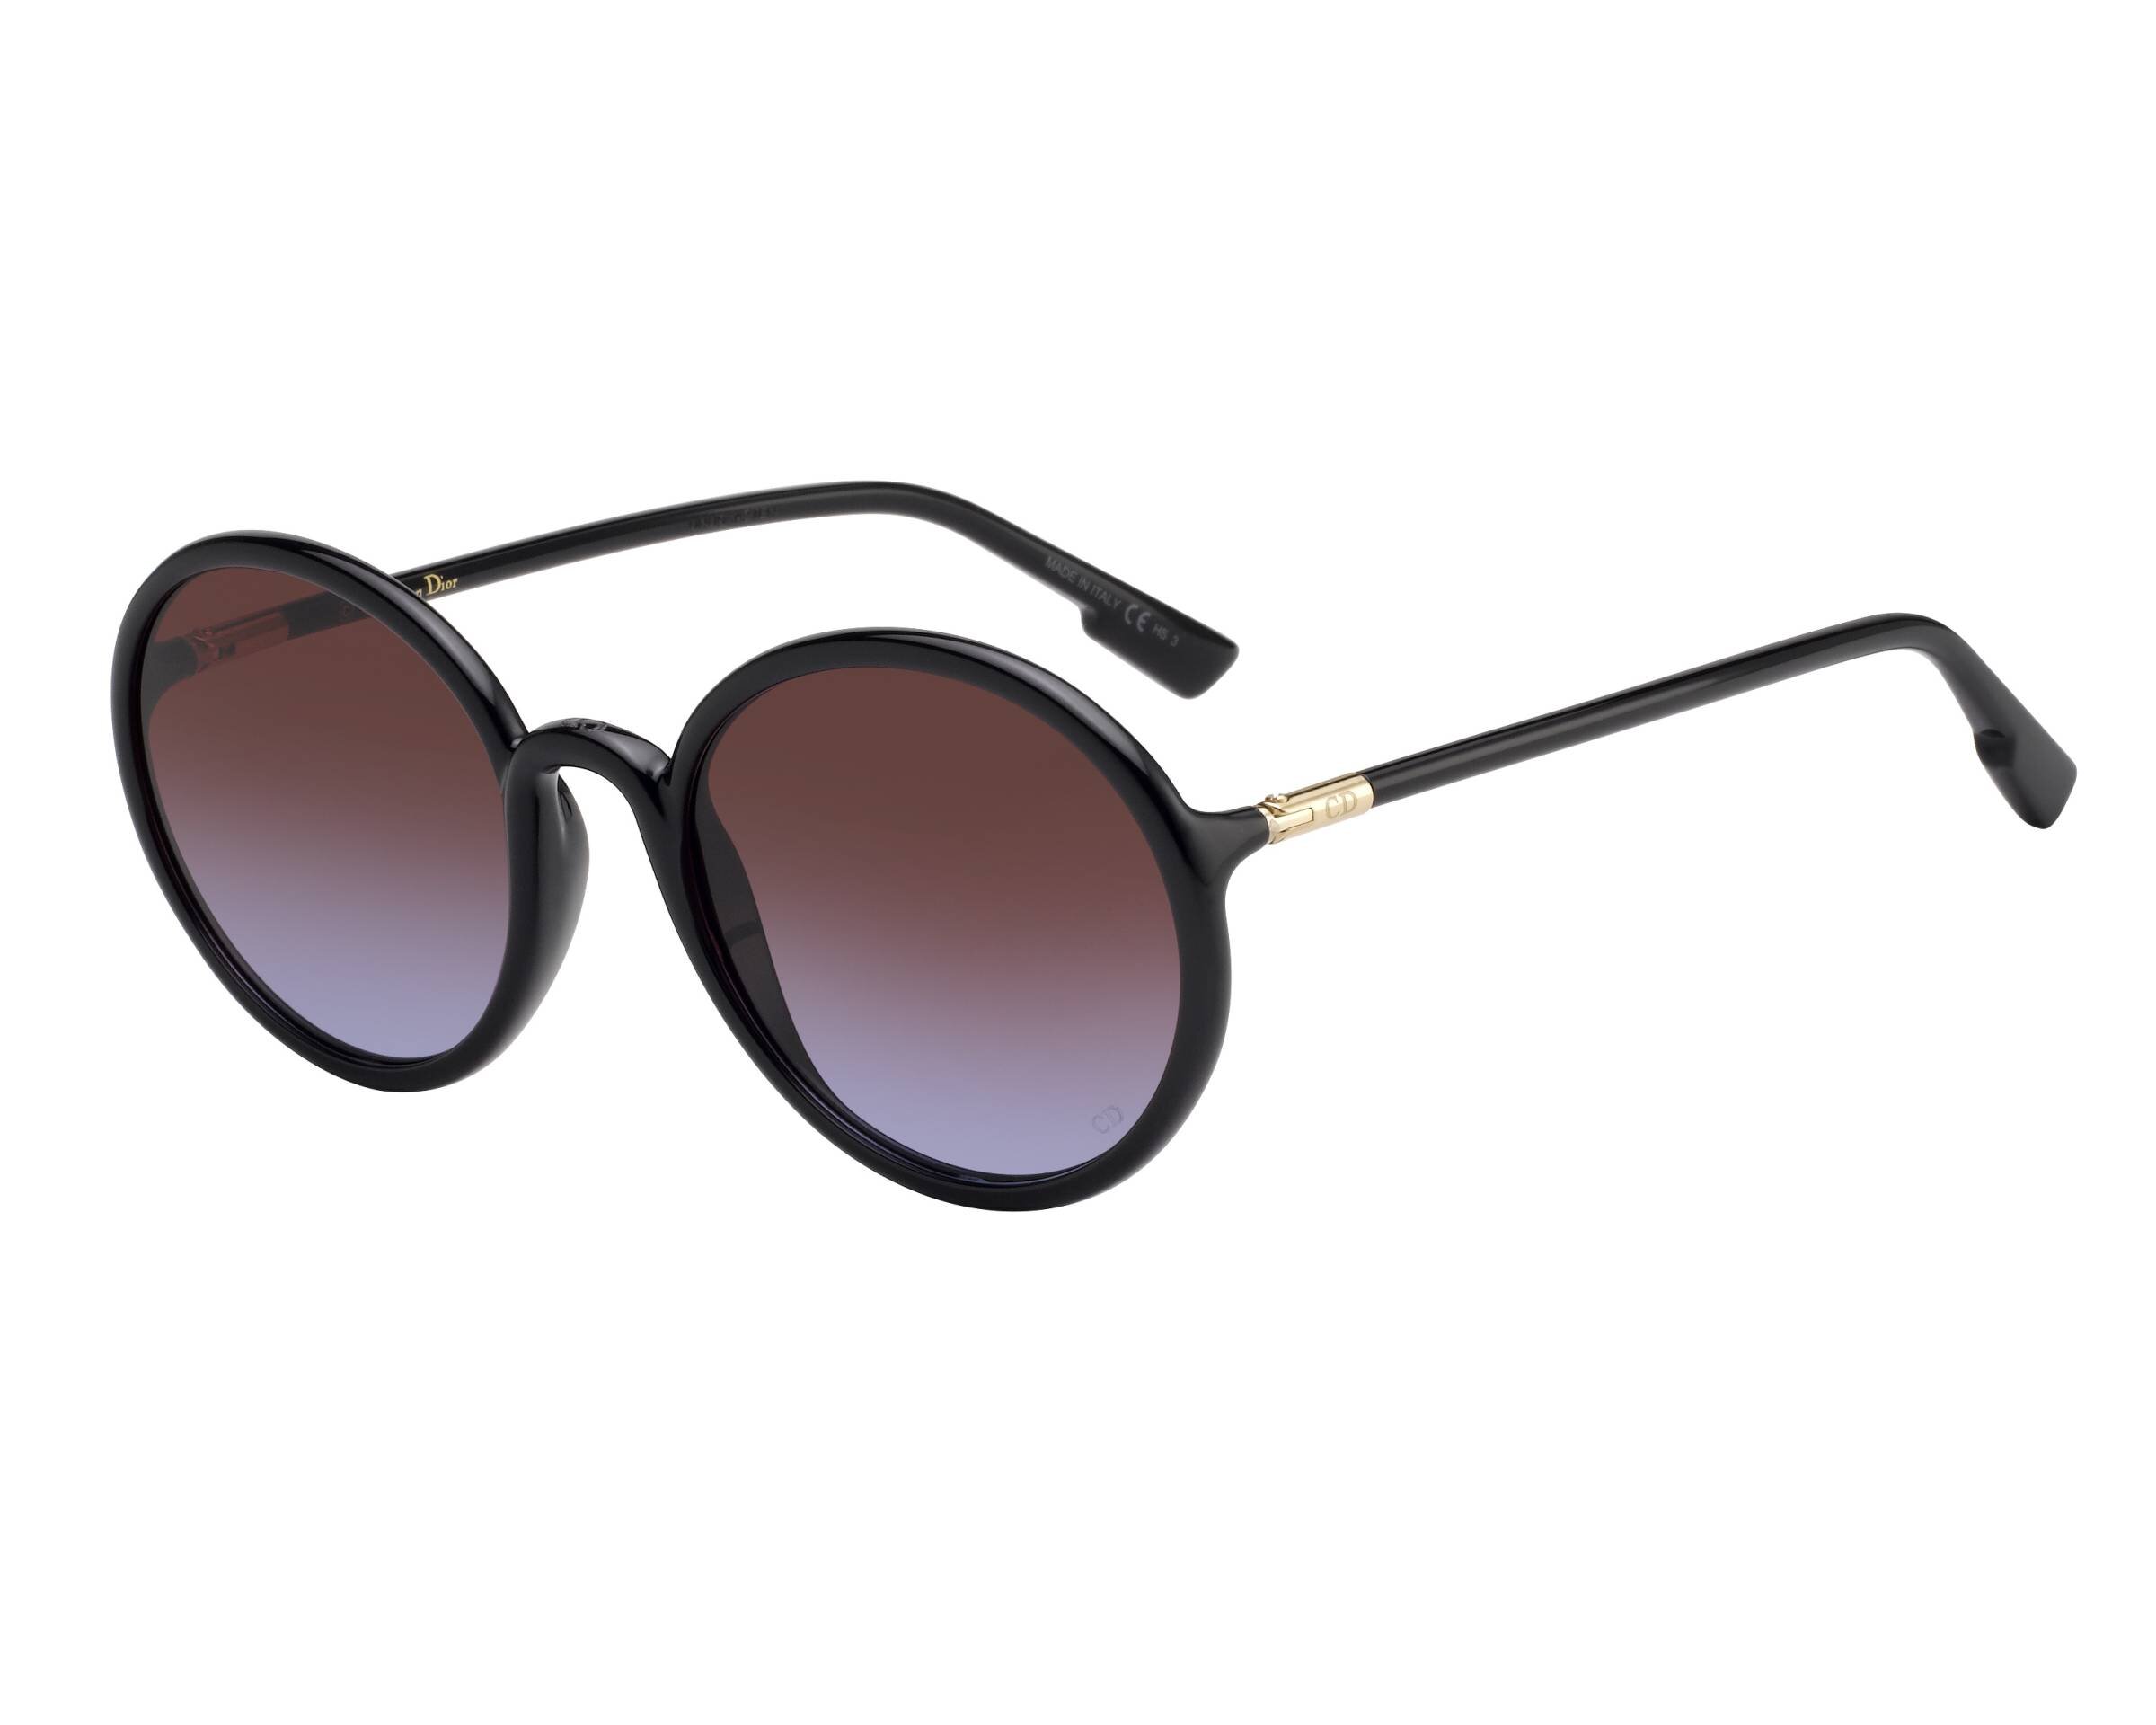 Christian Dior DiorSoStellaire2 Sunglasses in Black.jpg